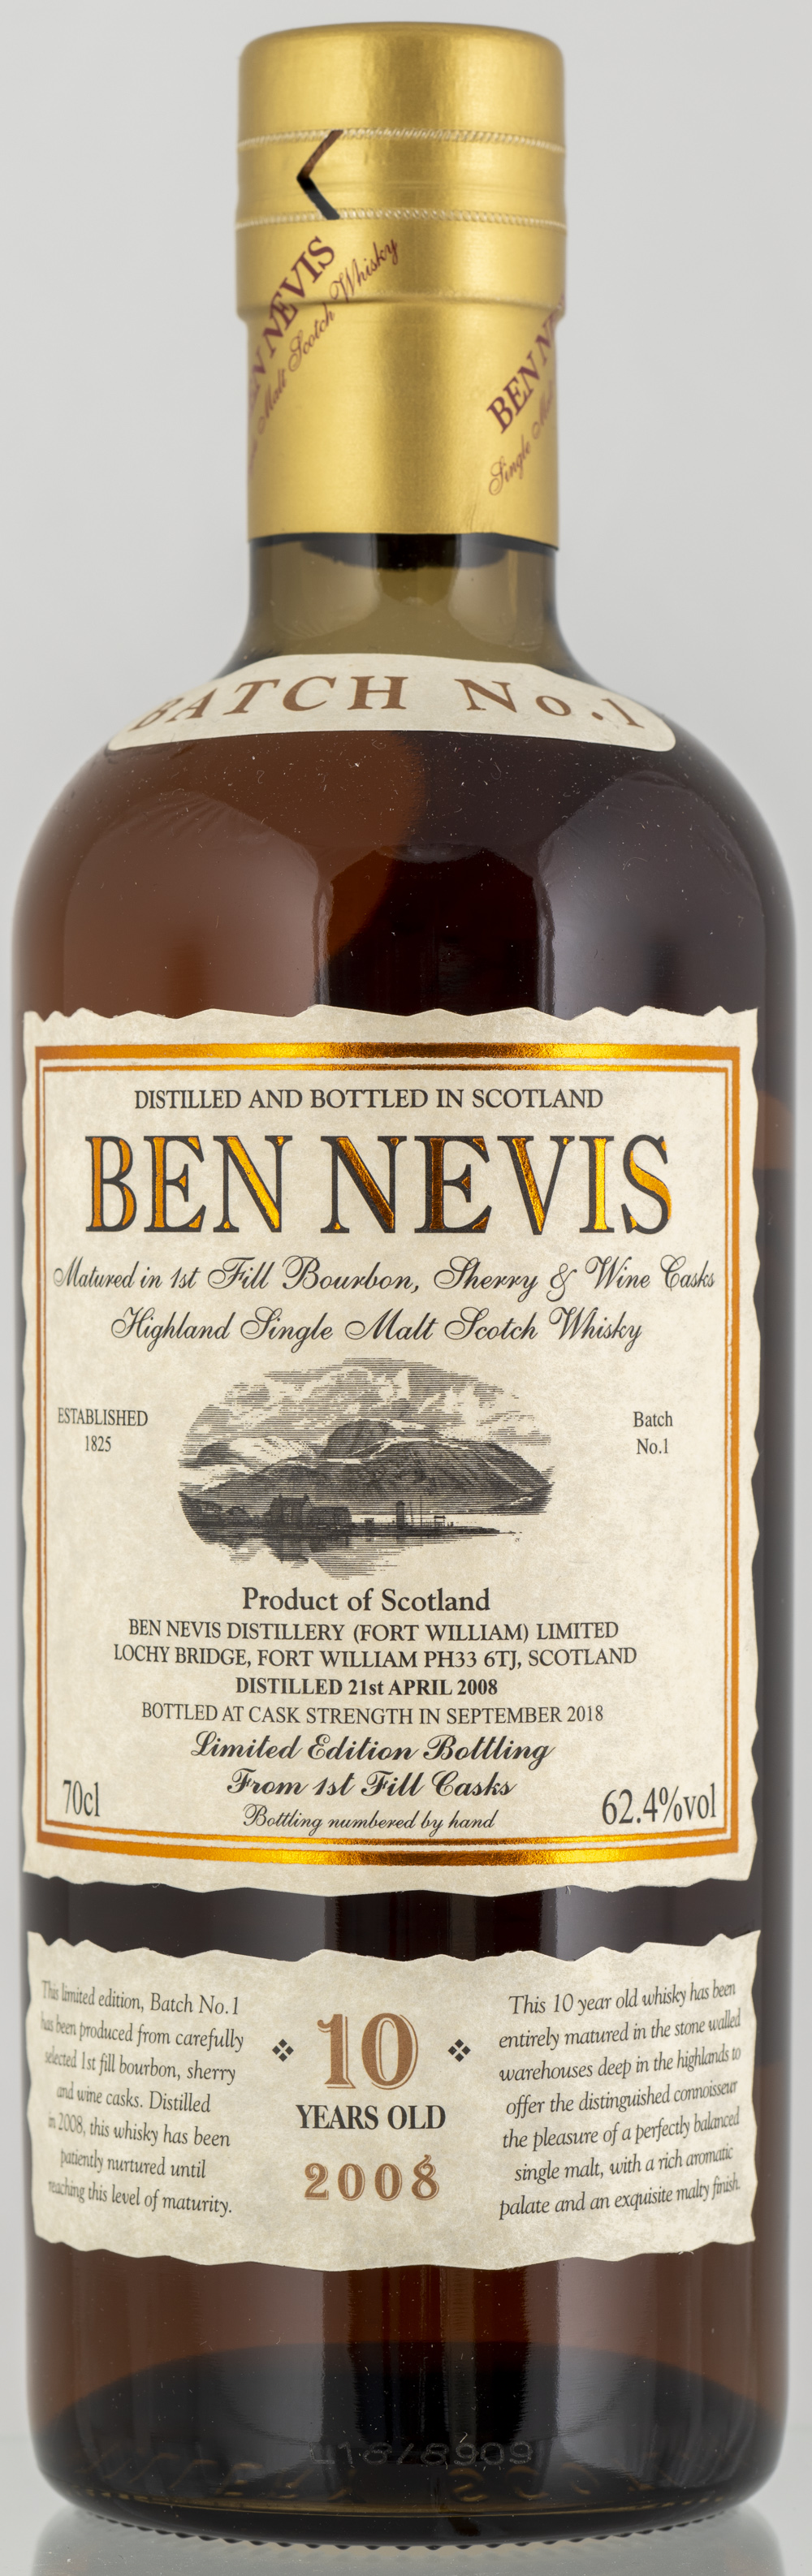 Billede: PHC_2584 - Ben Nevis 10 Batch No. 1 Limited Edition - bottle front.jpg